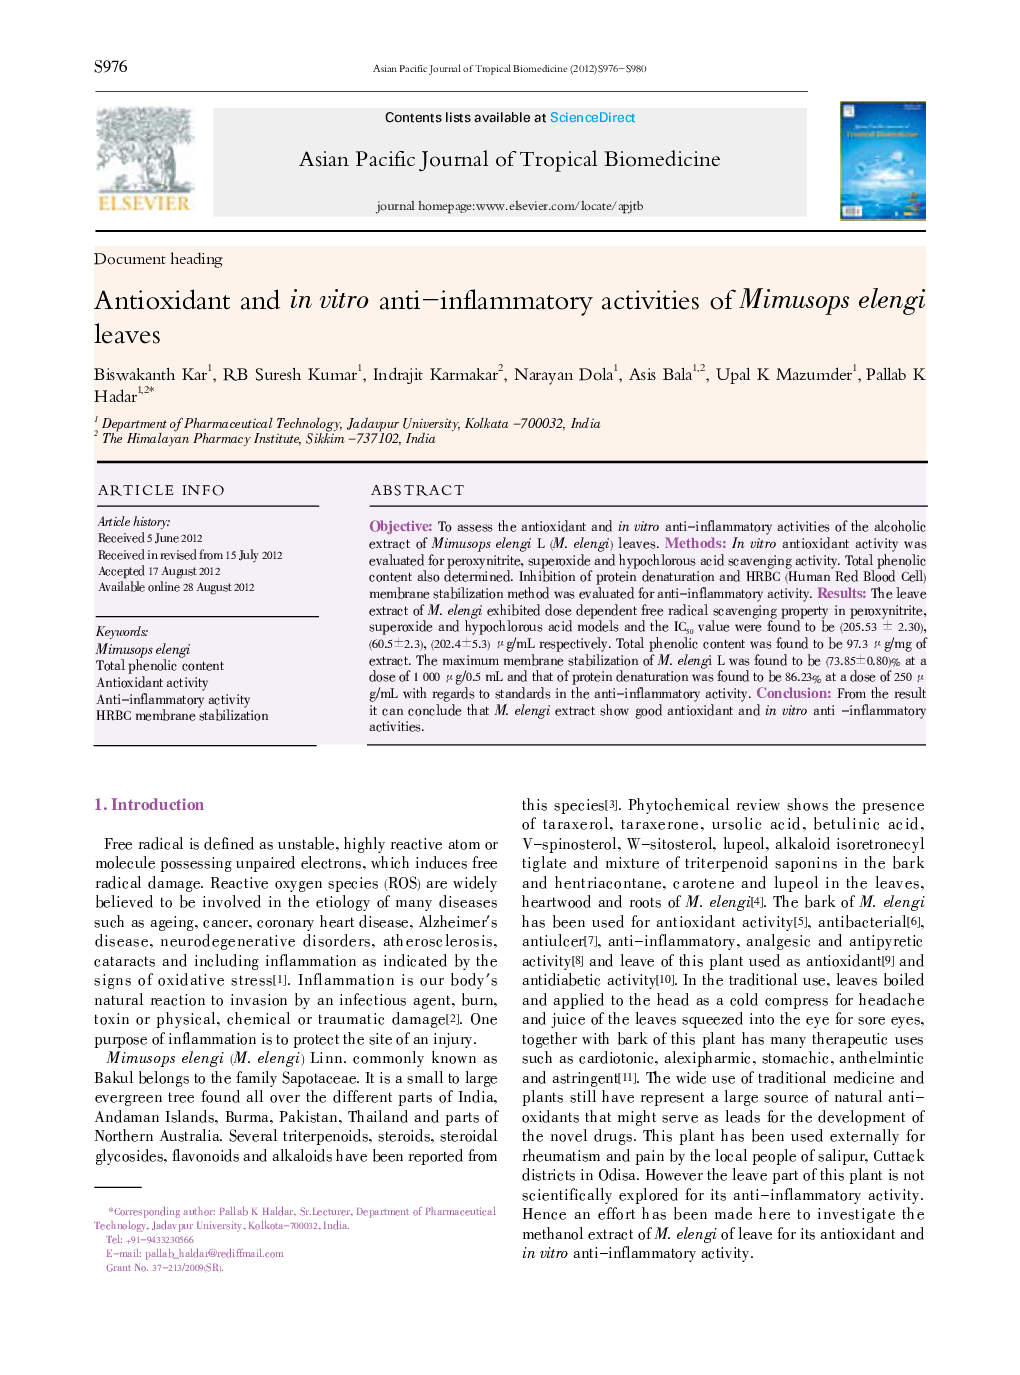 Antioxidant and in vitro anti-inflammatory activities of Mimusops elengi leaves